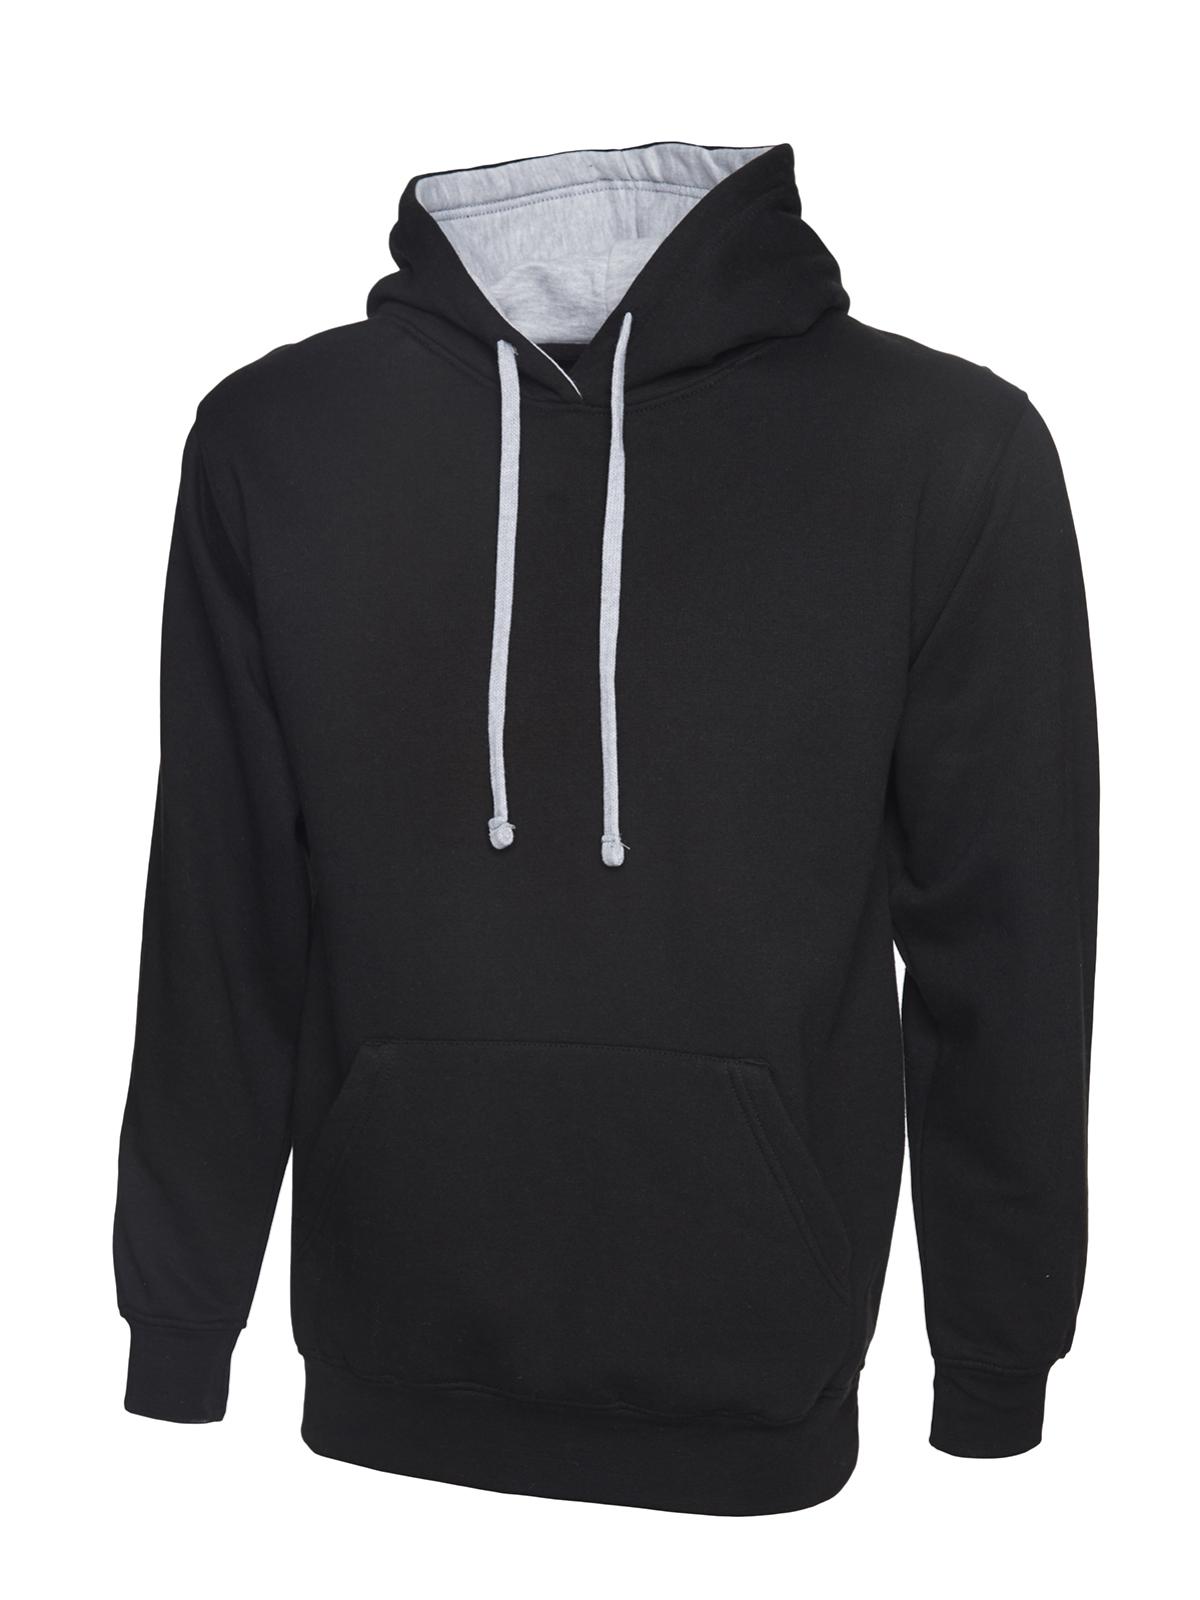 Uneek Contrast Hooded Sweatshirt - Black/Heather Grey | Order Uniform ...